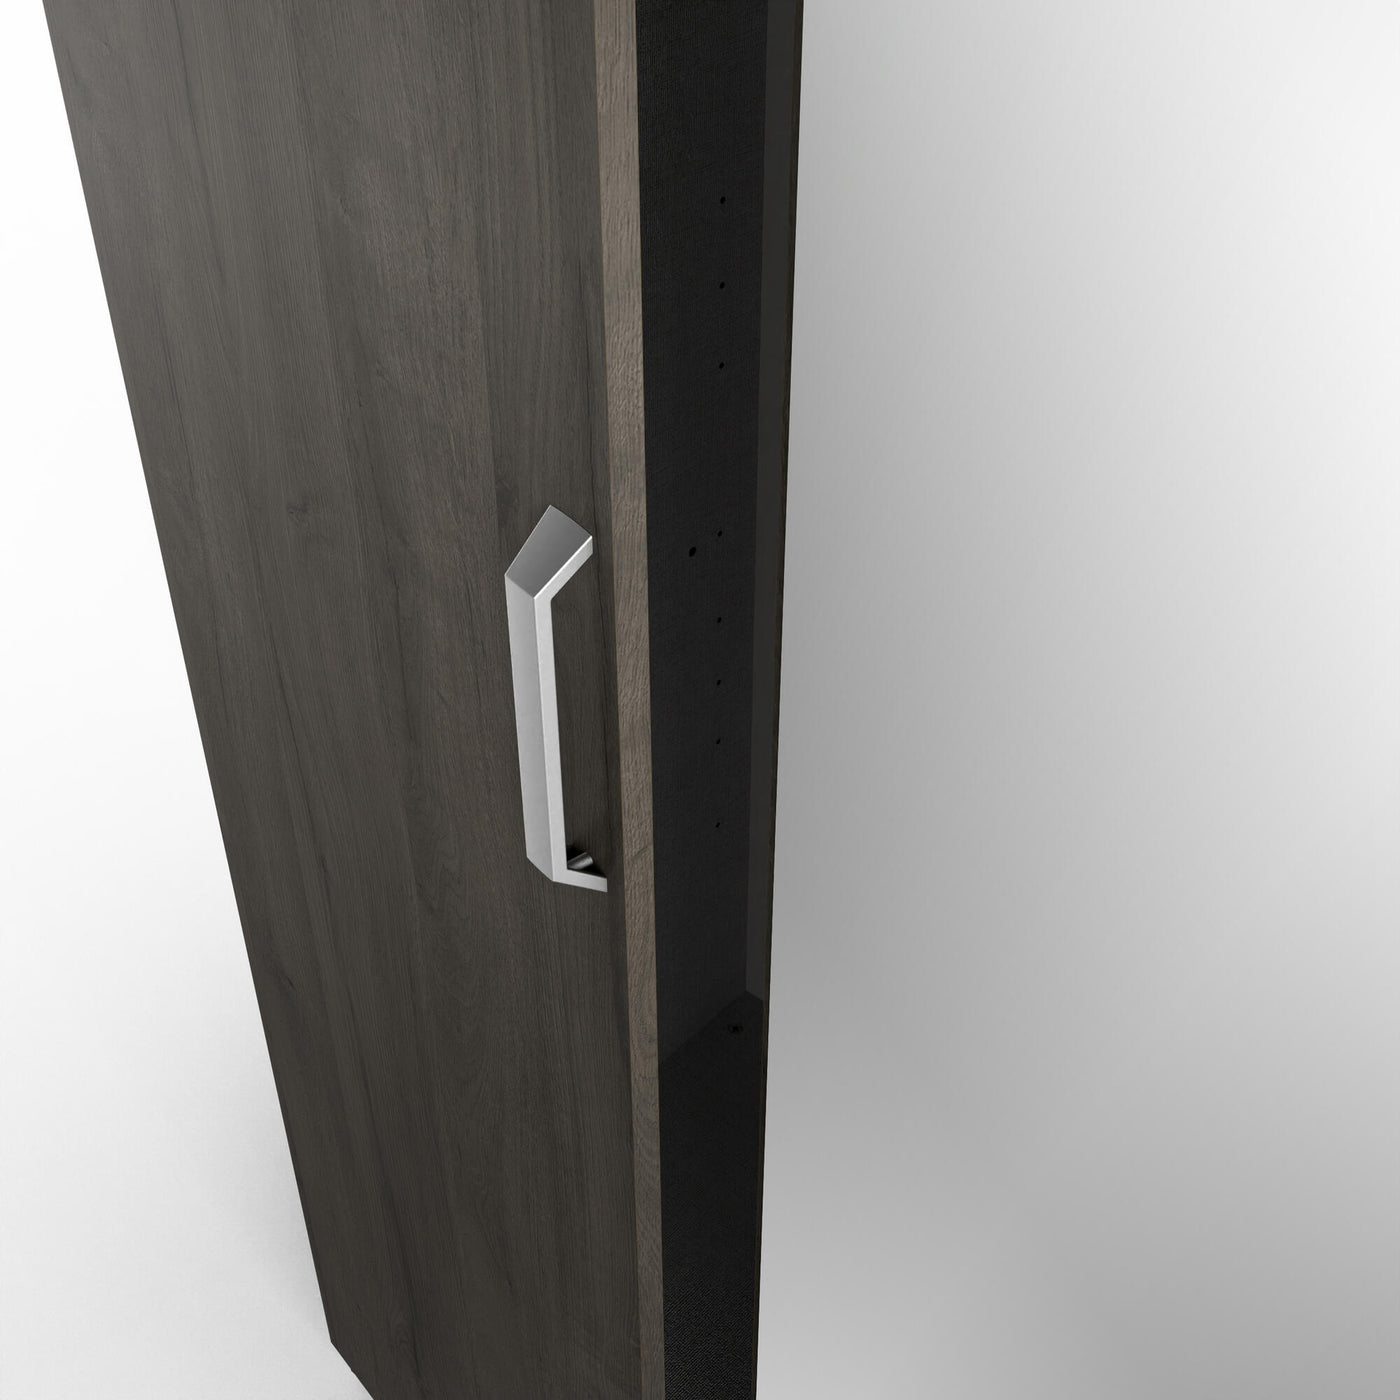 Kledingkast 3 deuren waarvan 1 spiegeldeur met PU handvaten in donker bruine kleur